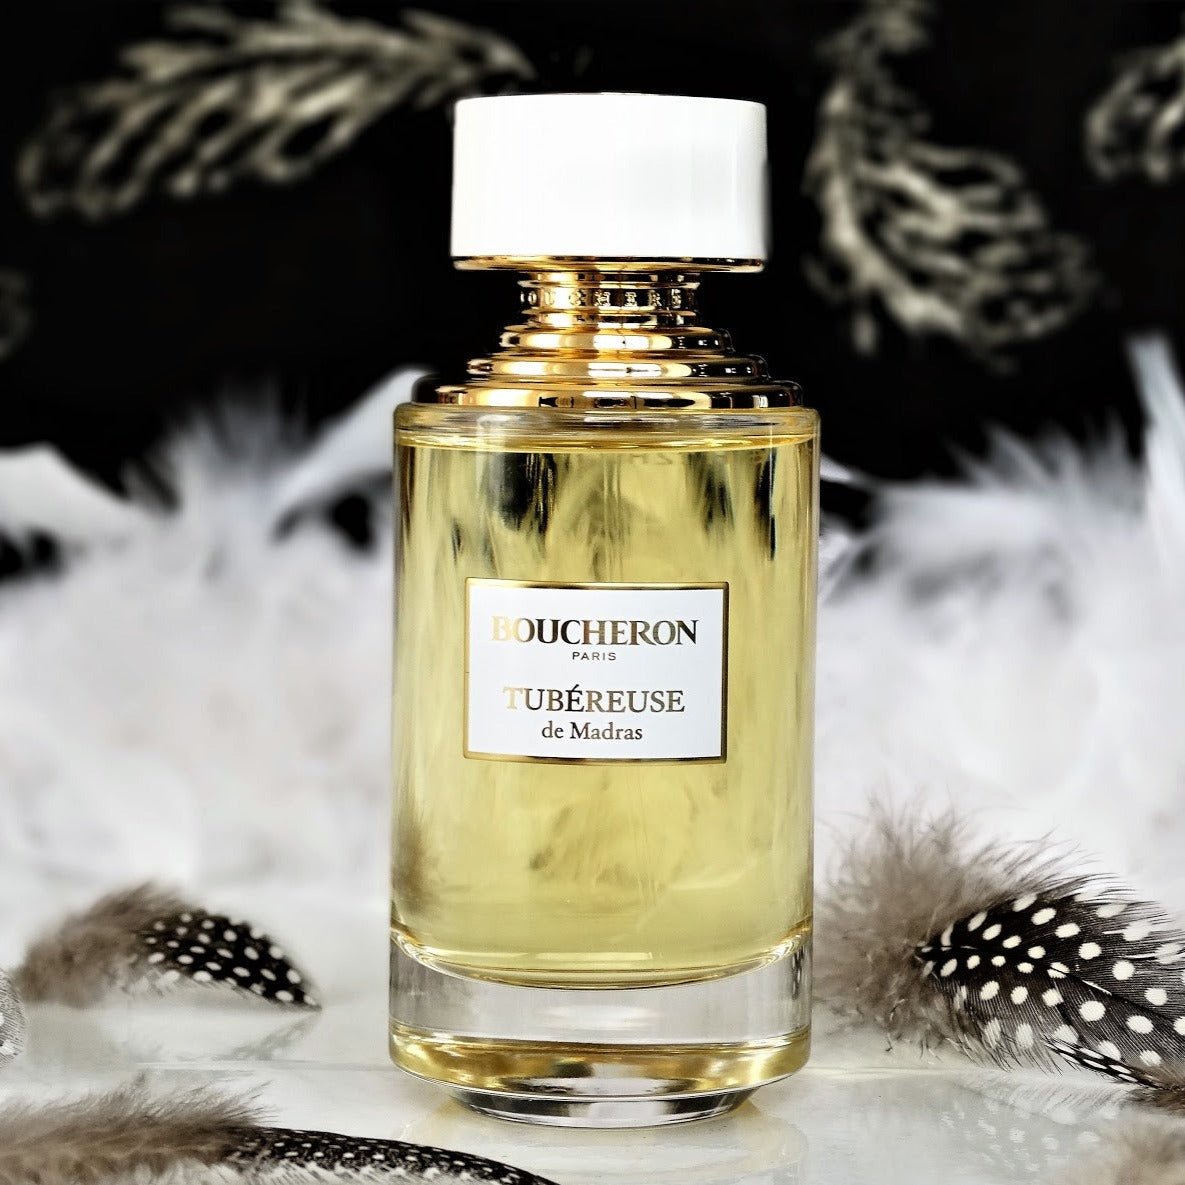 Boucheron Tubereuse De Madras EDP | My Perfume Shop Australia